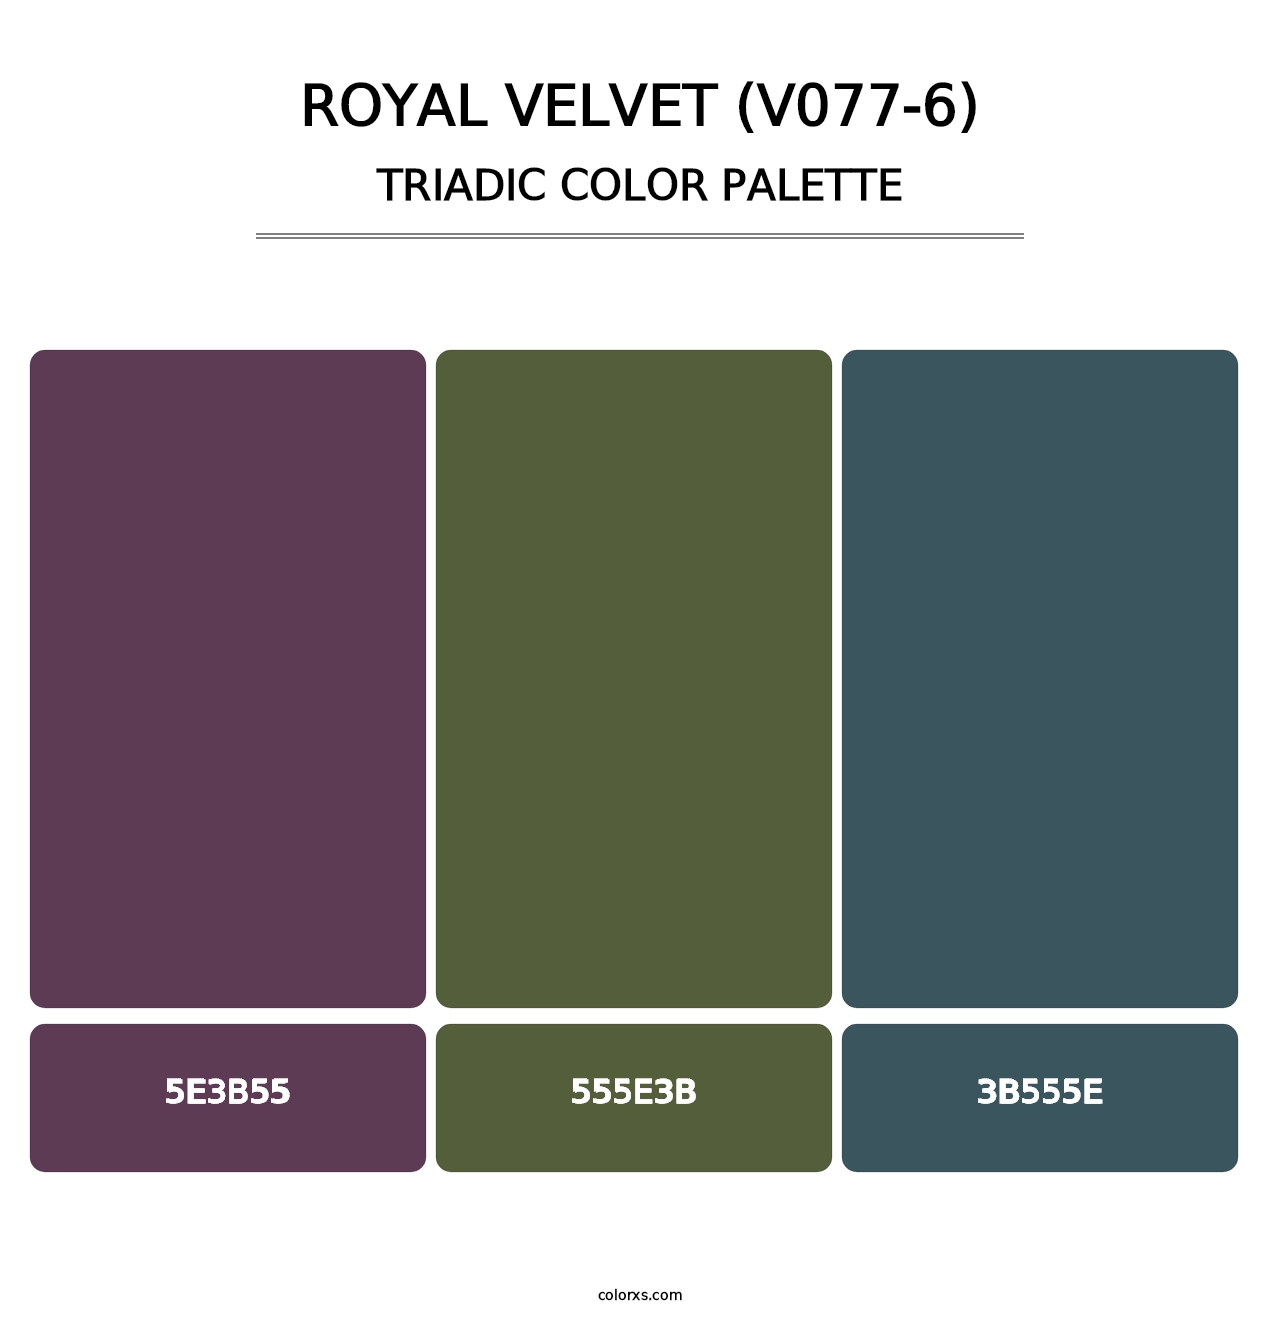 Royal Velvet (V077-6) - Triadic Color Palette